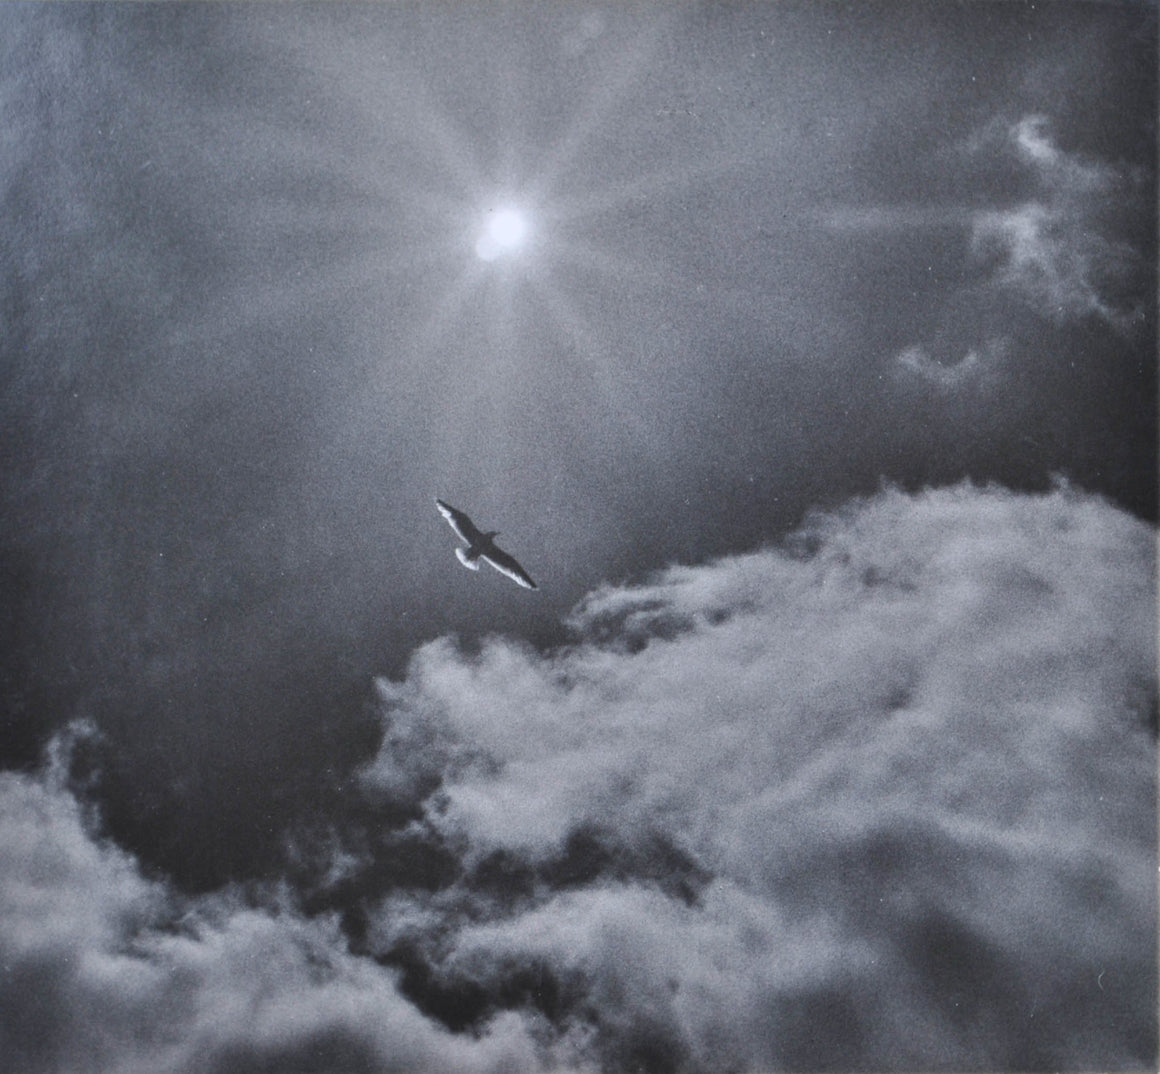 1969 Flight Photo by Joseph Buemy [Buemi] Signed Freedom and Sun